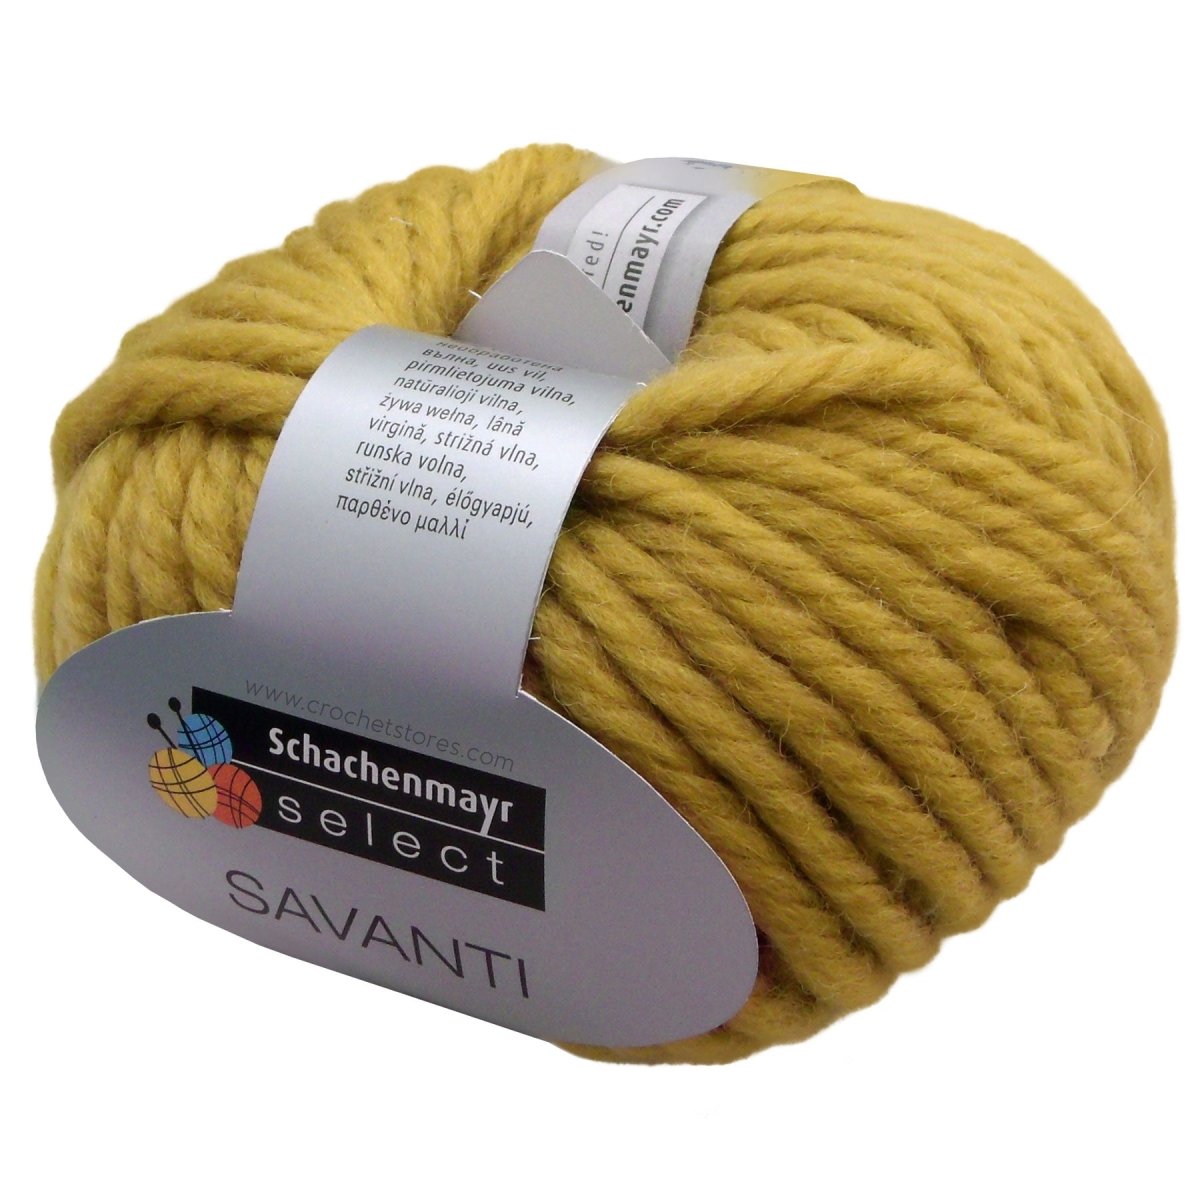 SAVANTI - Crochetstores9811771-47284053859043595